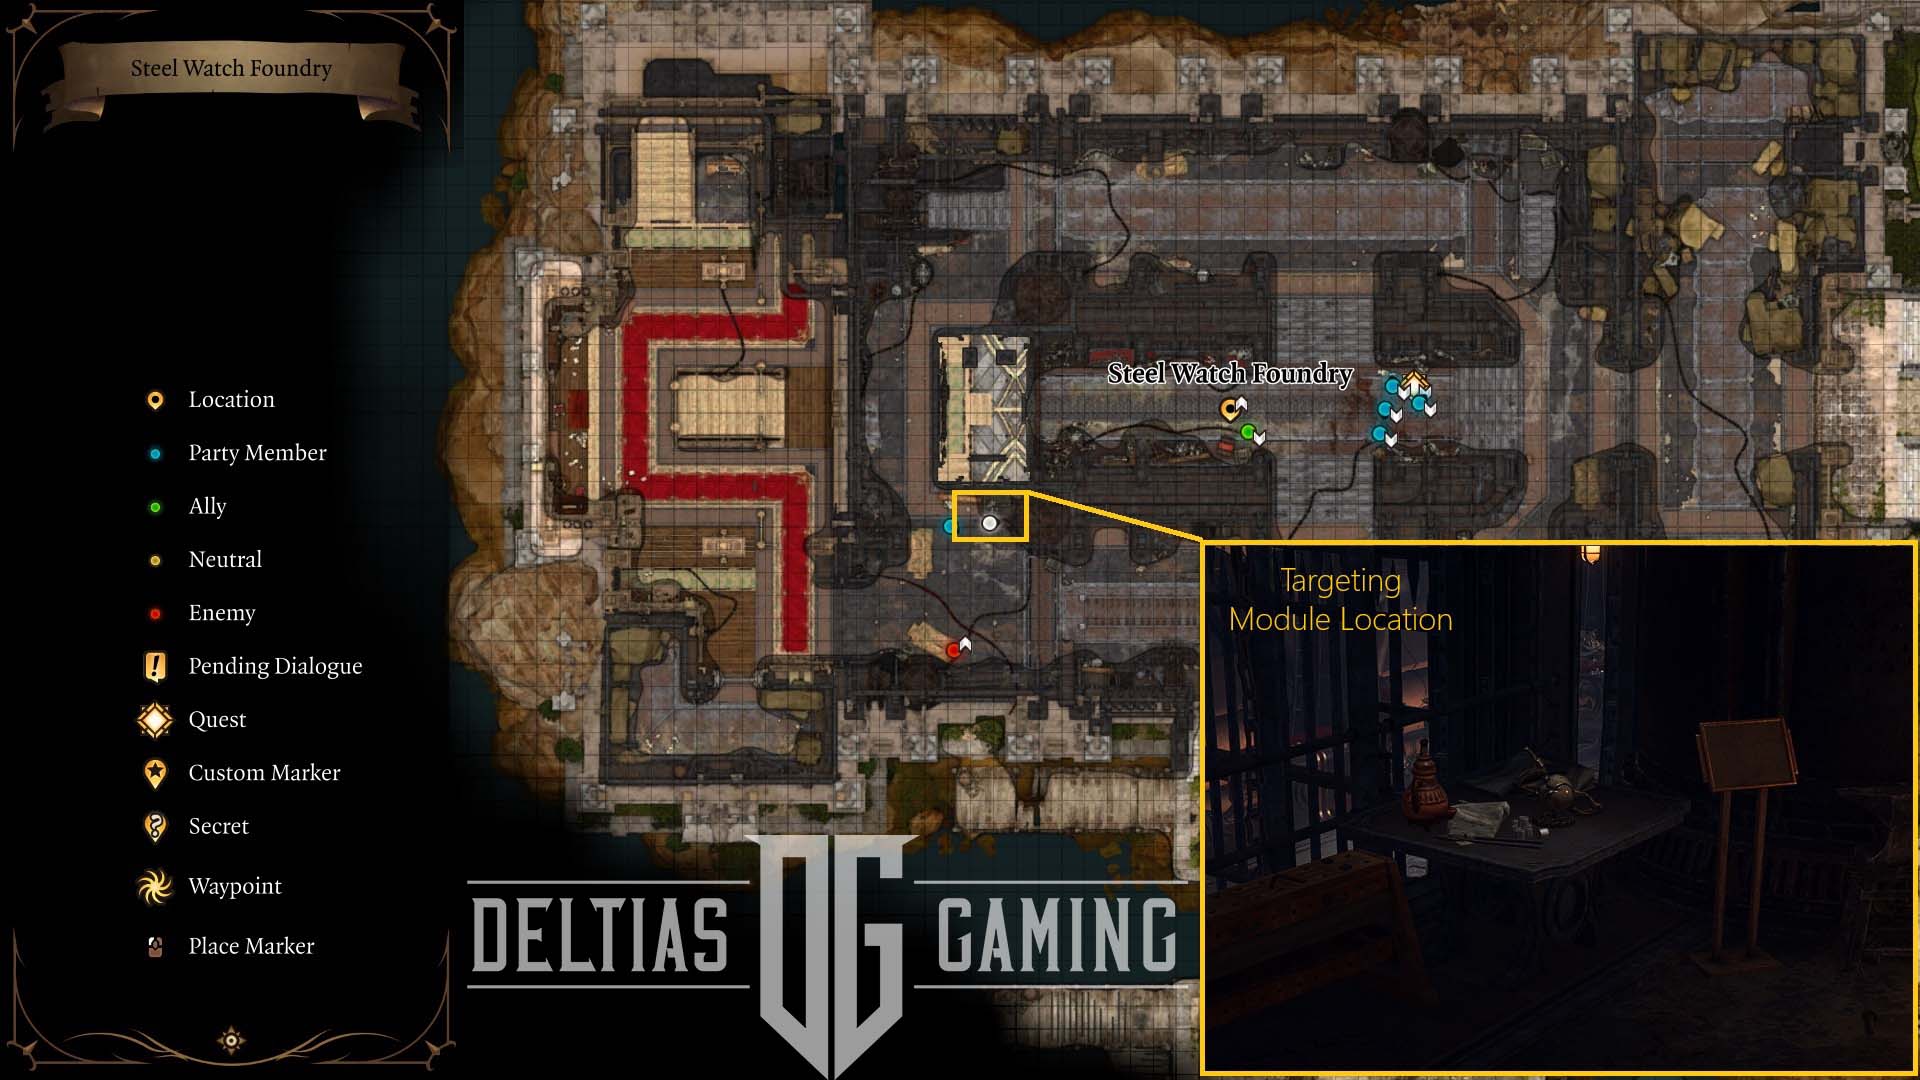 Targeting Module Location - Hellfire Engine Crossbow - Baldur's Gate 3